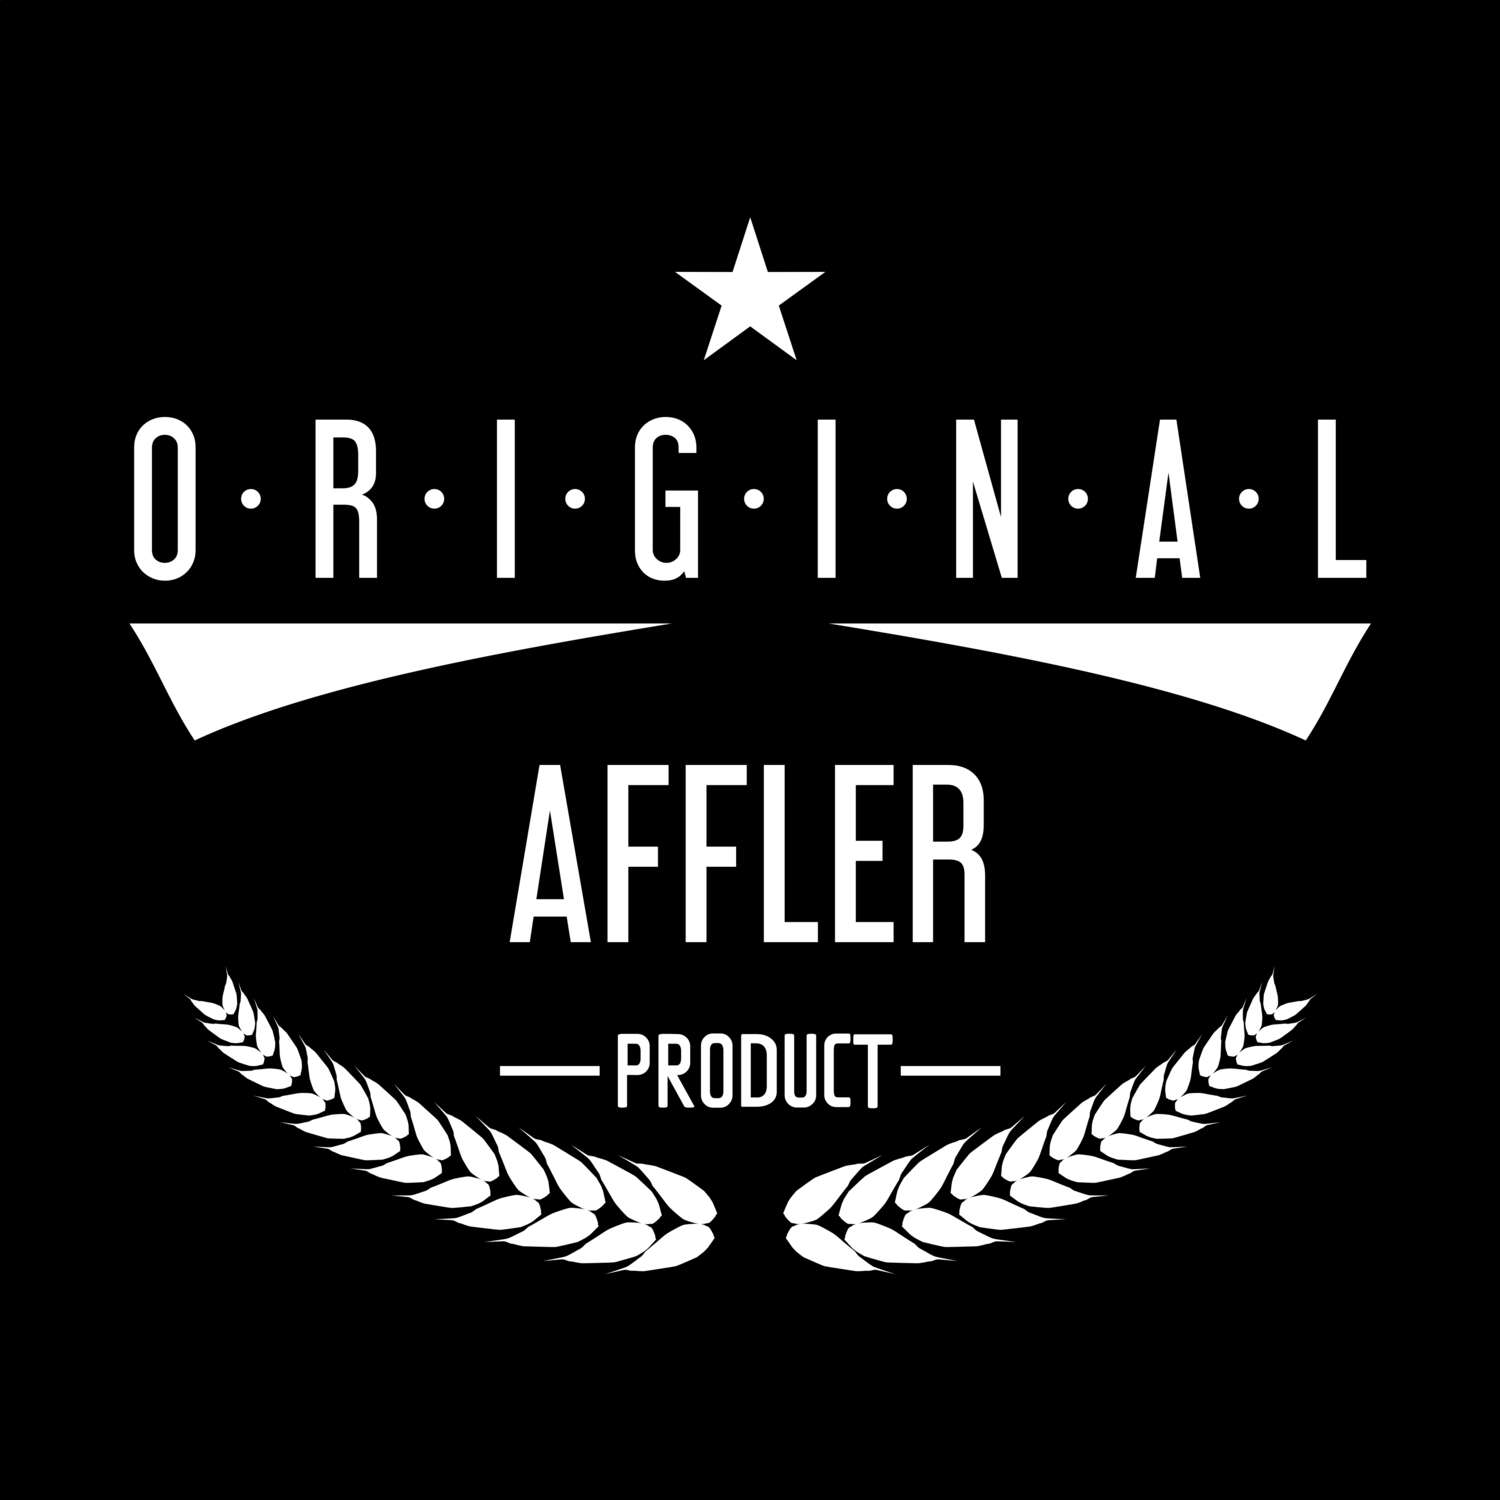 Affler T-Shirt »Original Product«